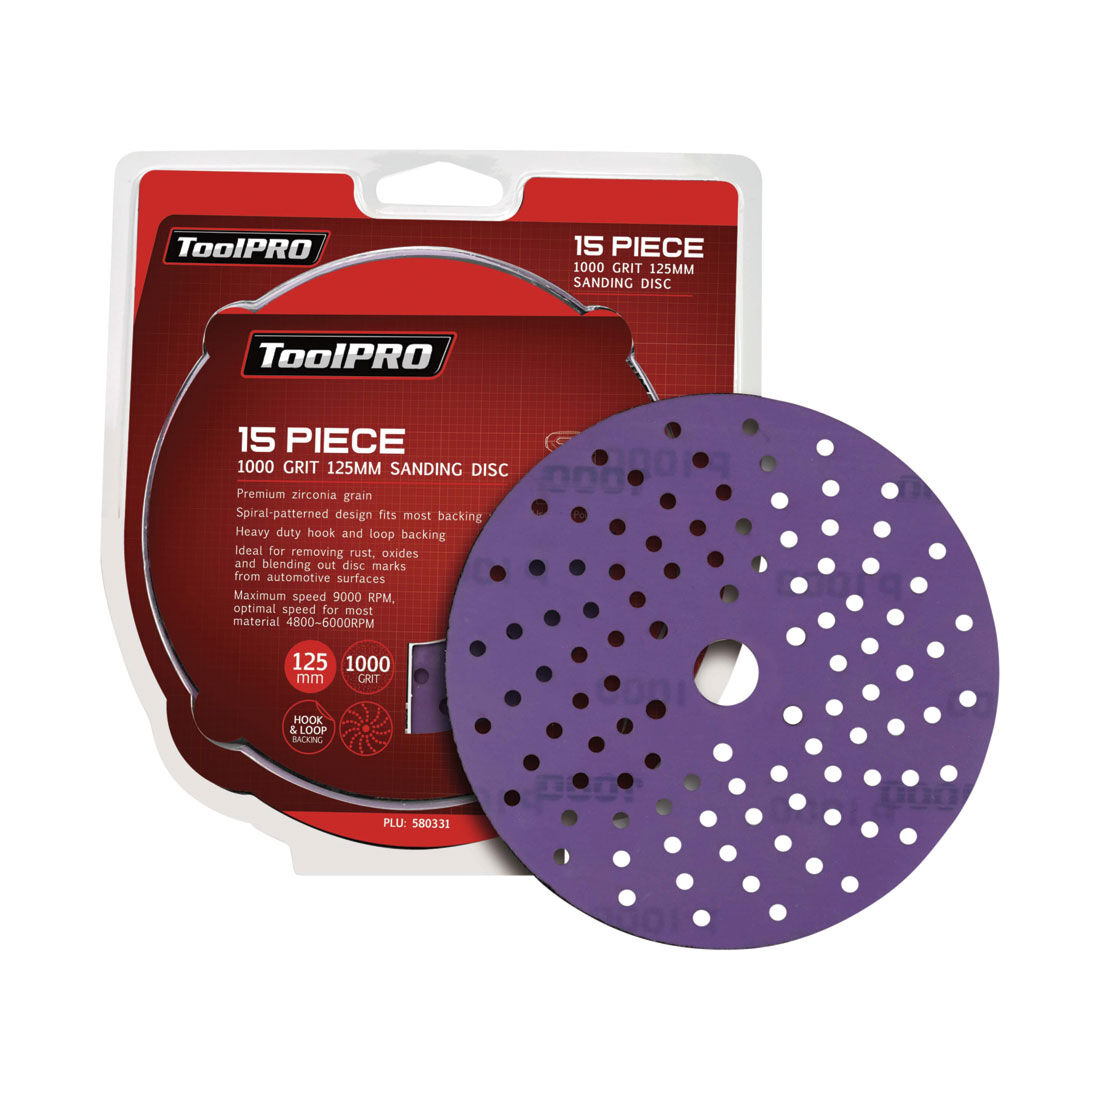 ToolPRO Sanding Disc 125mm 1000 Grit, , scaau_hi-res